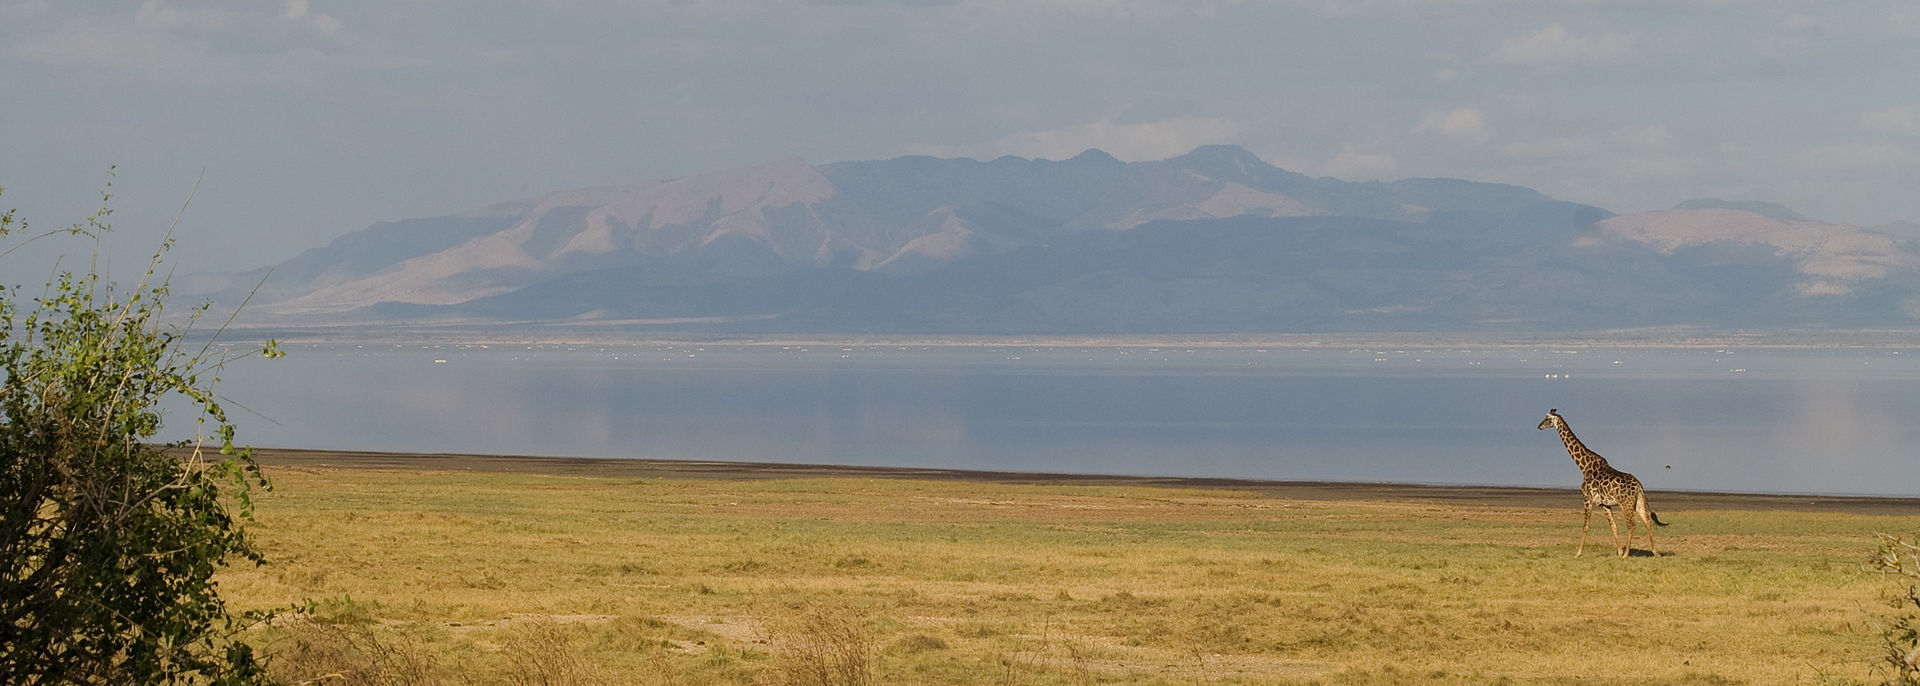 Lake Manyara by Fanny Schertzer (Wikimedia)